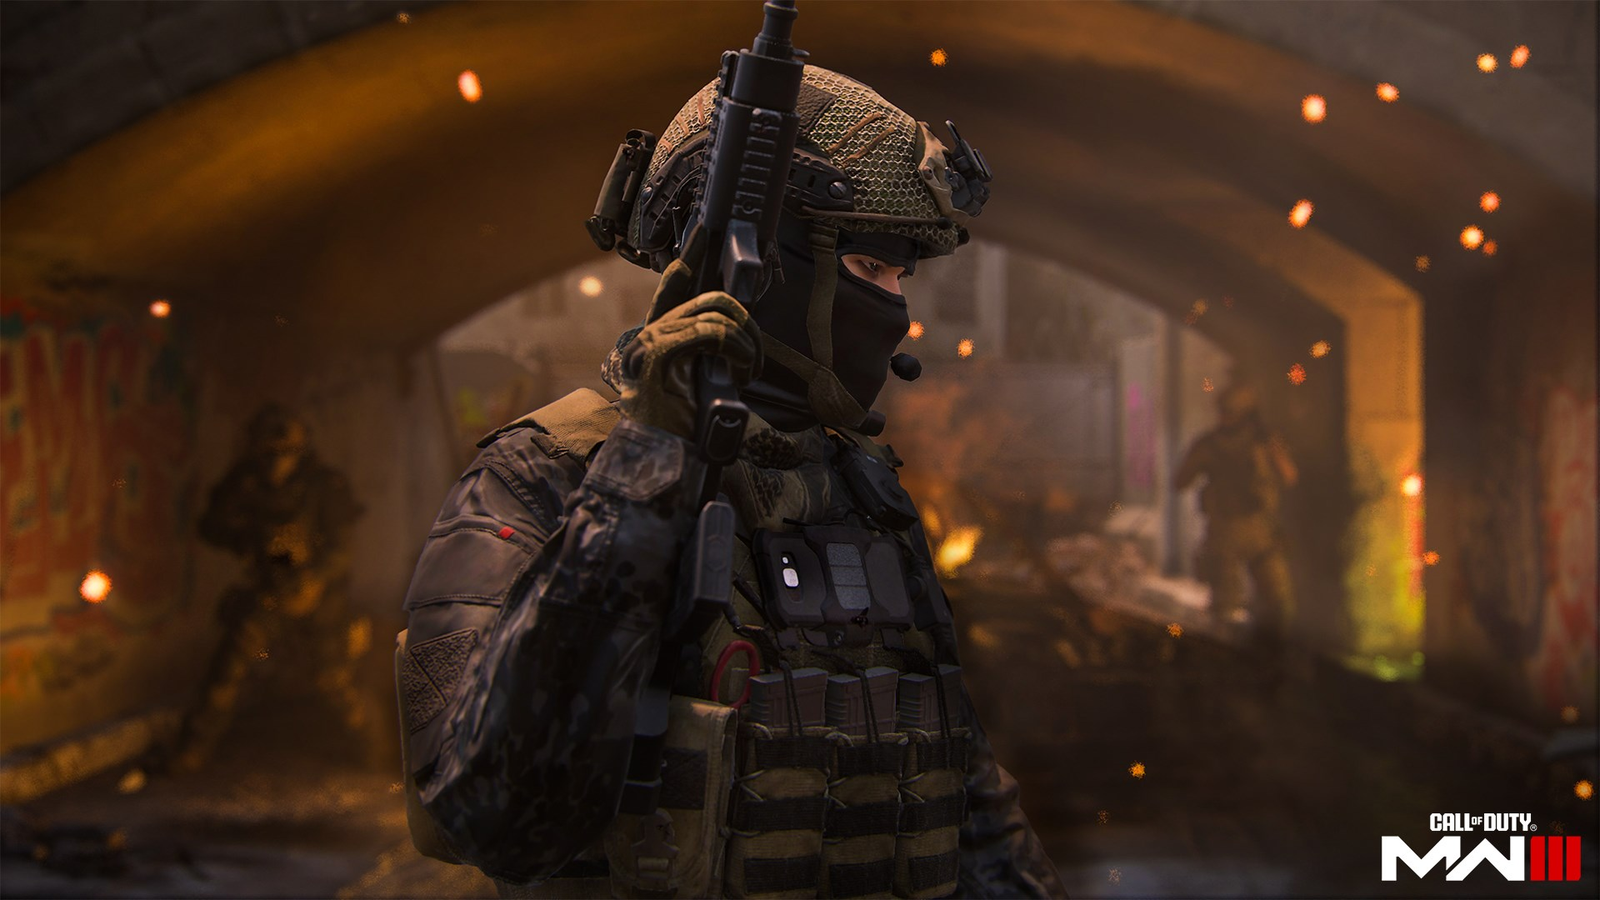 All Modern Warfare 3 gameplay features confirmed so far